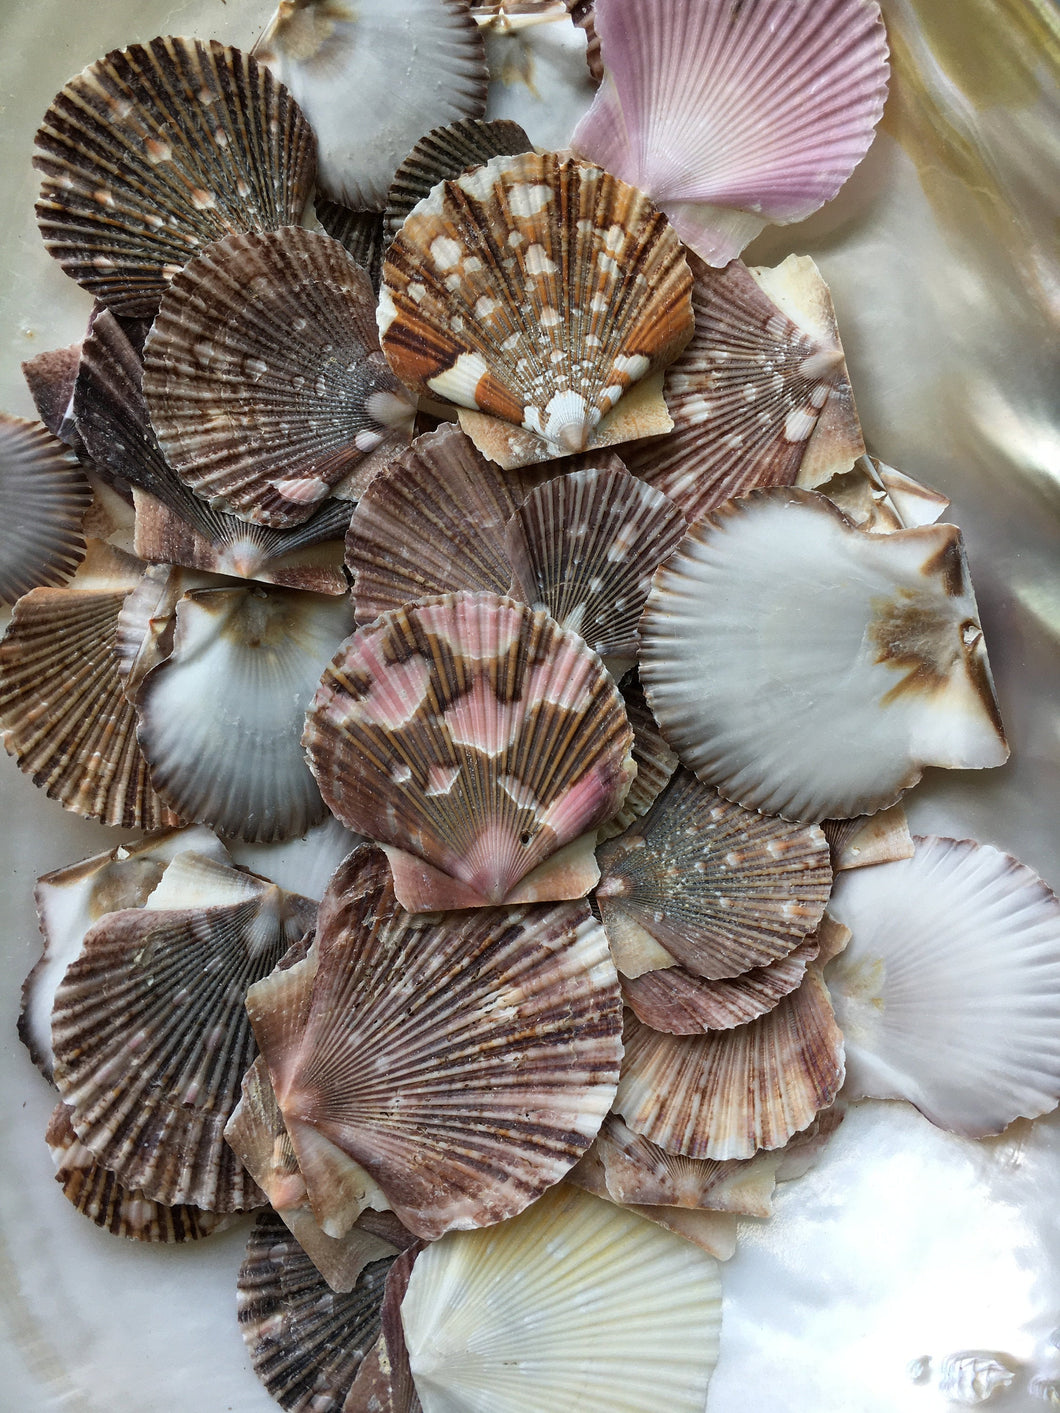 Baby Flat Scallop Shell-Bulk - Seashell Supplies - Scallop Shells for Crafts - Flat Scallop - Pectin Shells - Wedding Decor - FREE SHIPPING!